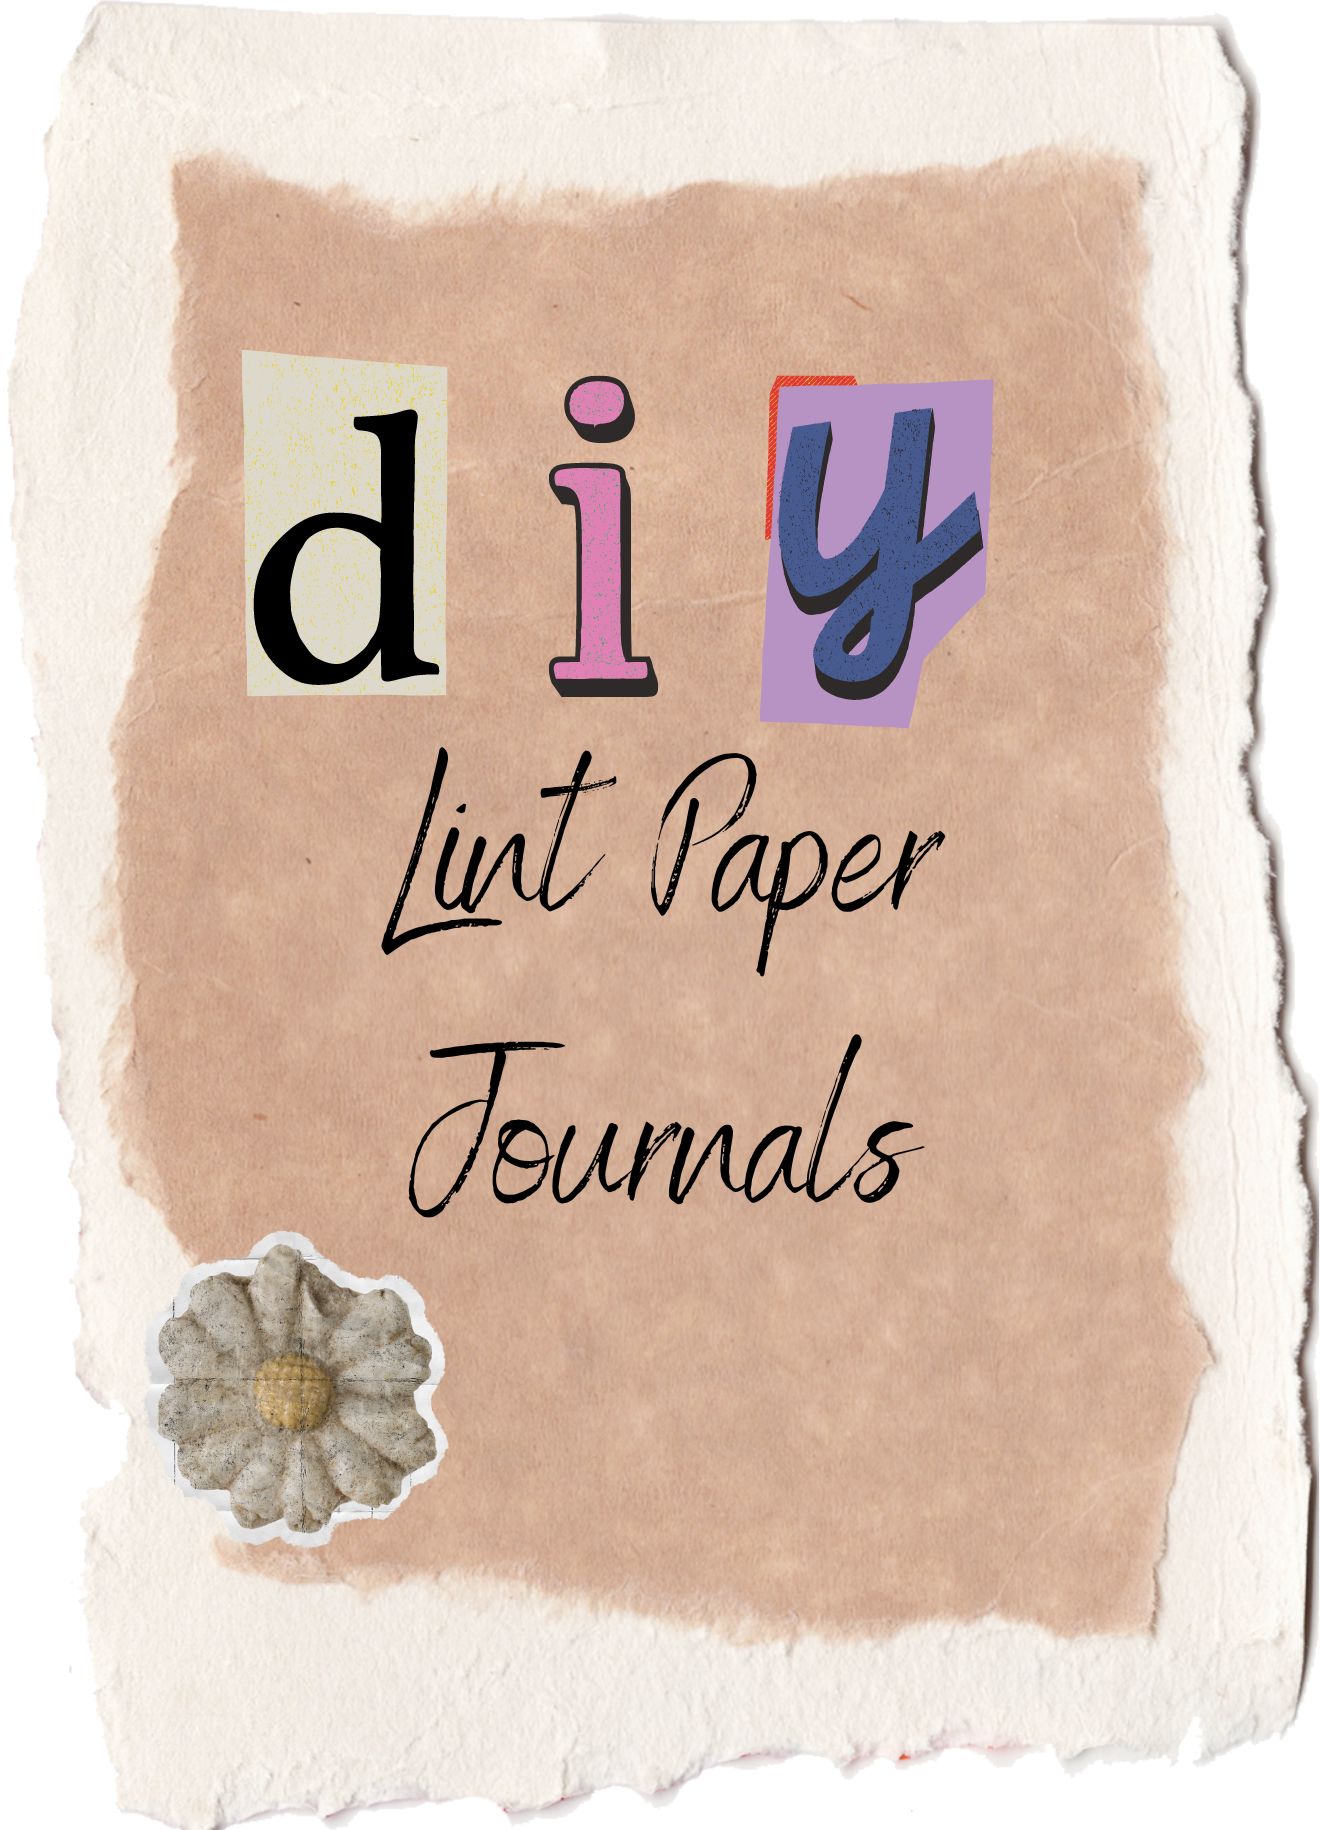 DIY Lint Paper Journals